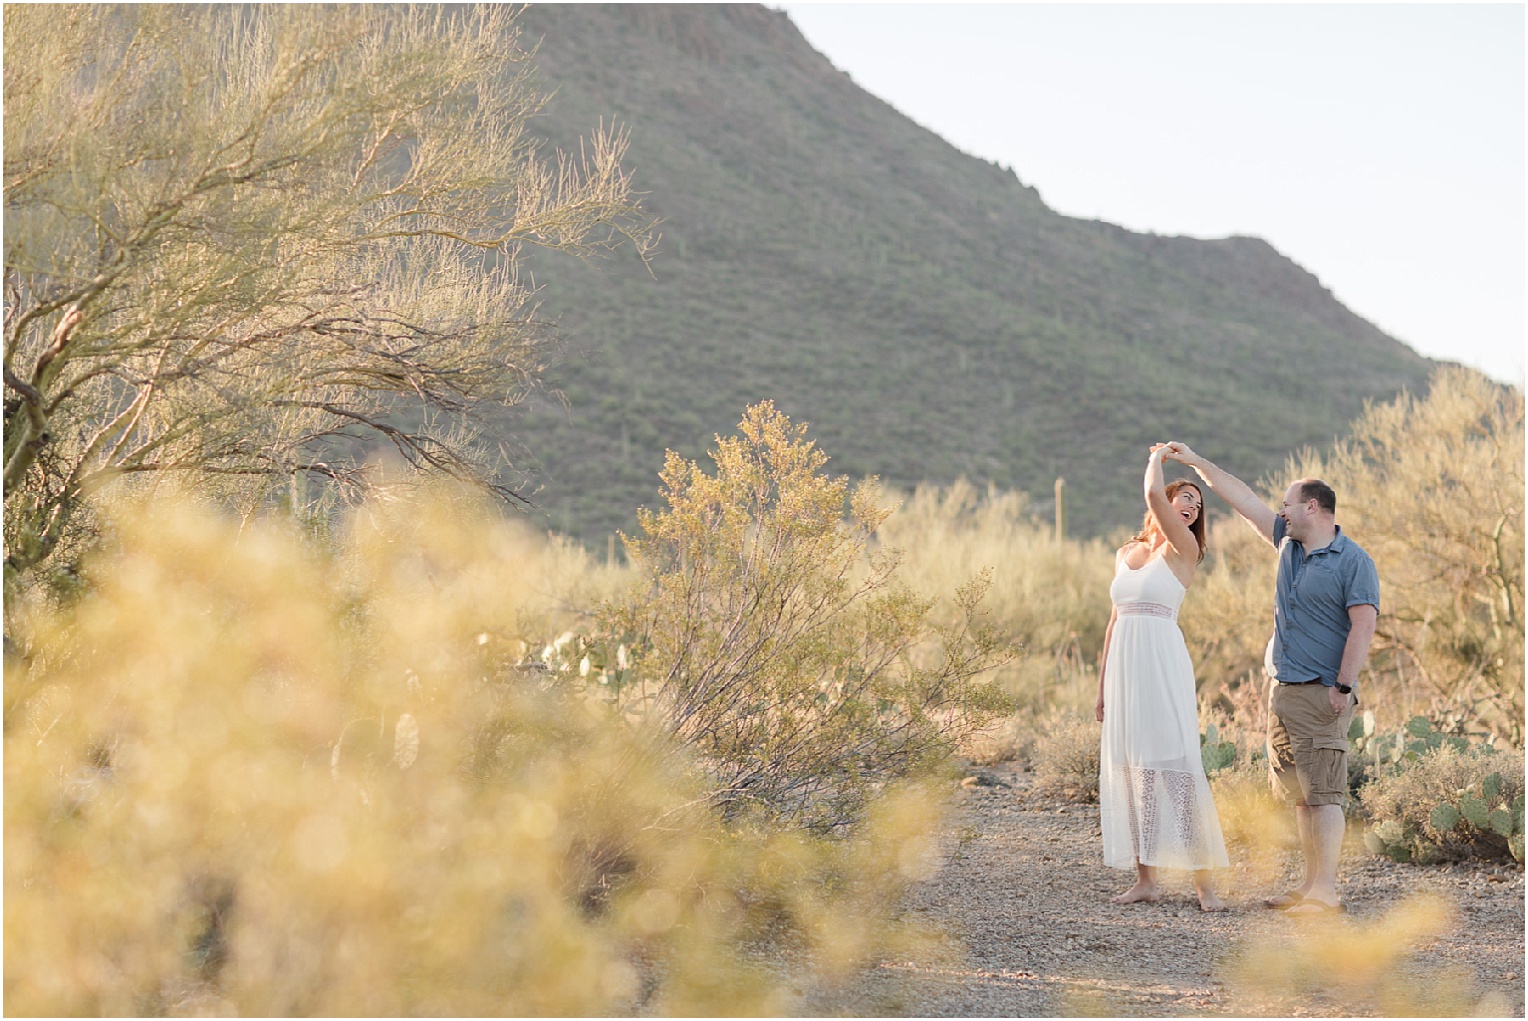 Sunrise Desert Couples Session Tucson Arizona Emilee + Charlie maxi dress engagement outfit